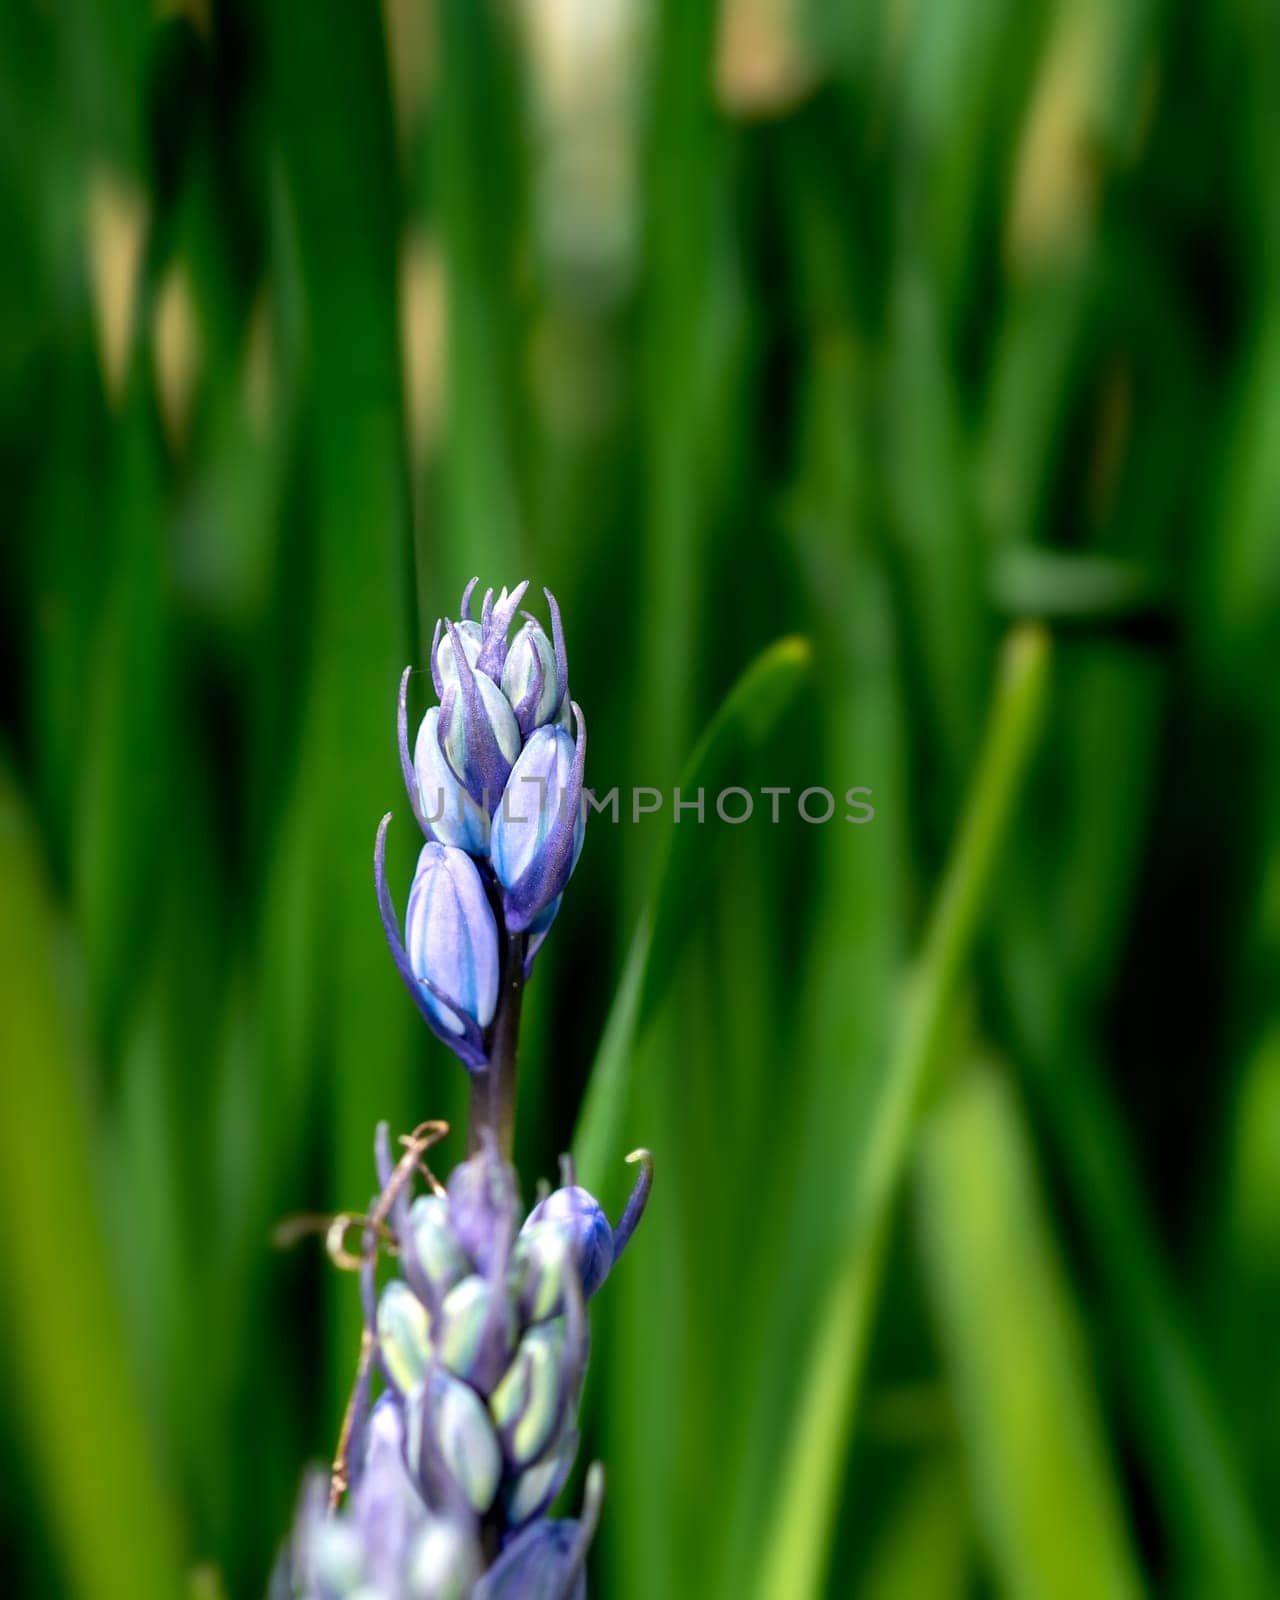 Blue Spanish bluebell flower on blurred background by Millenn